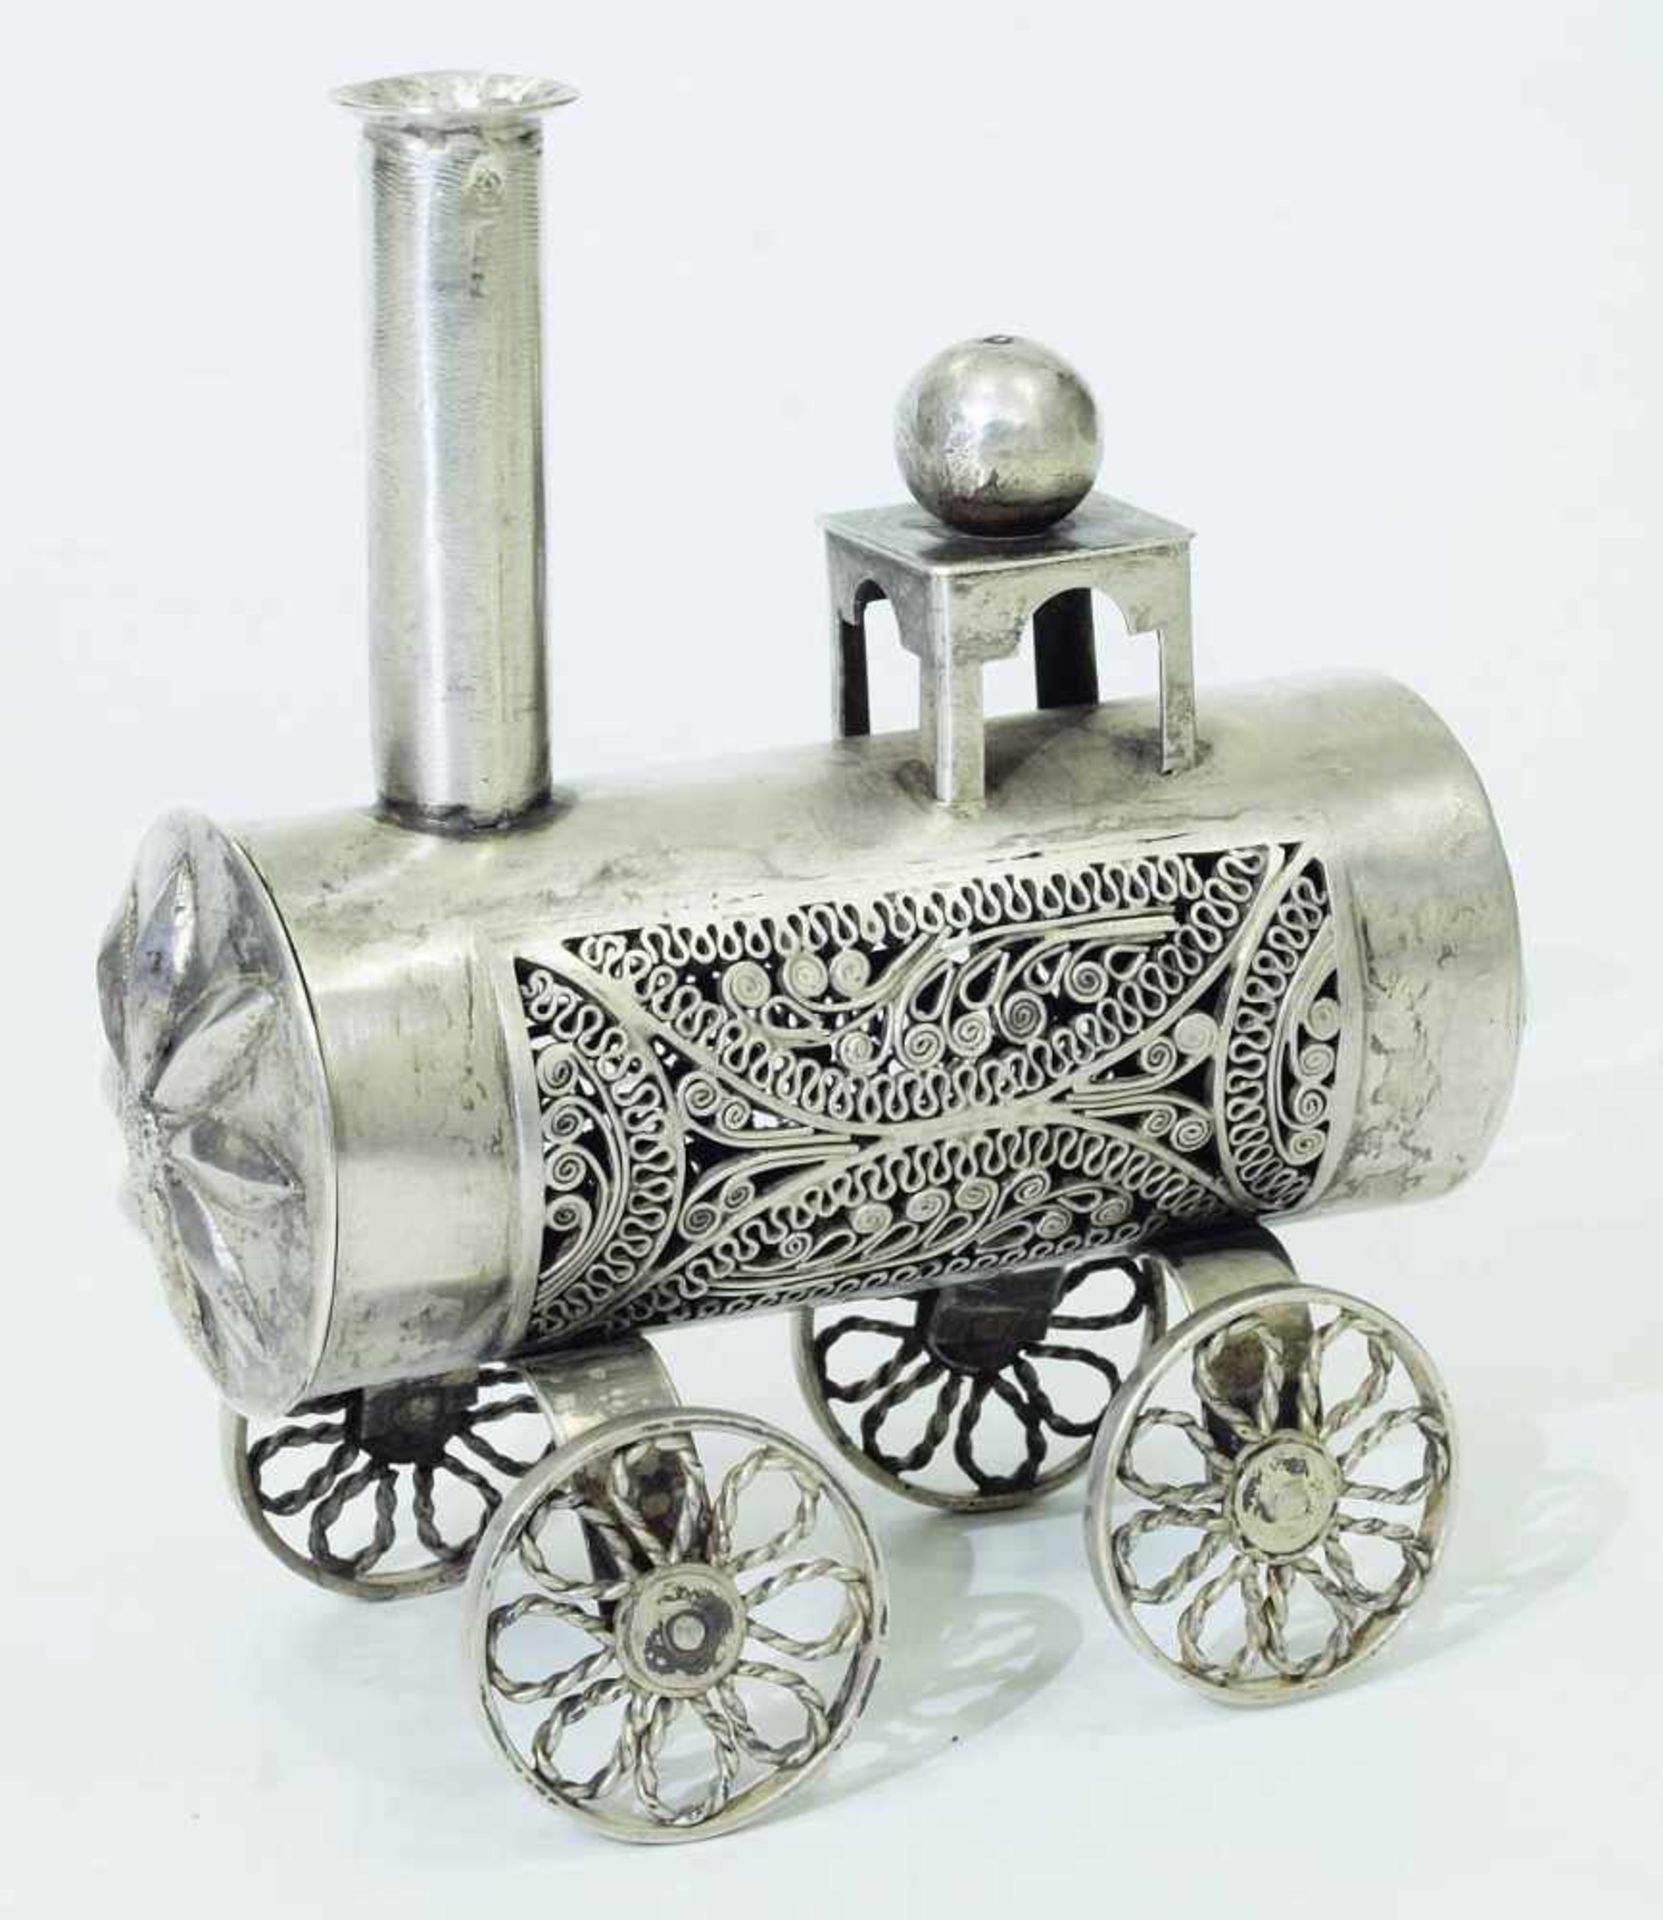 Stilisierte Lokomotive.Stilisierte Lokomotive. 19. Jahrhundert, 12-lötiges Silber punziert. - Bild 2 aus 4